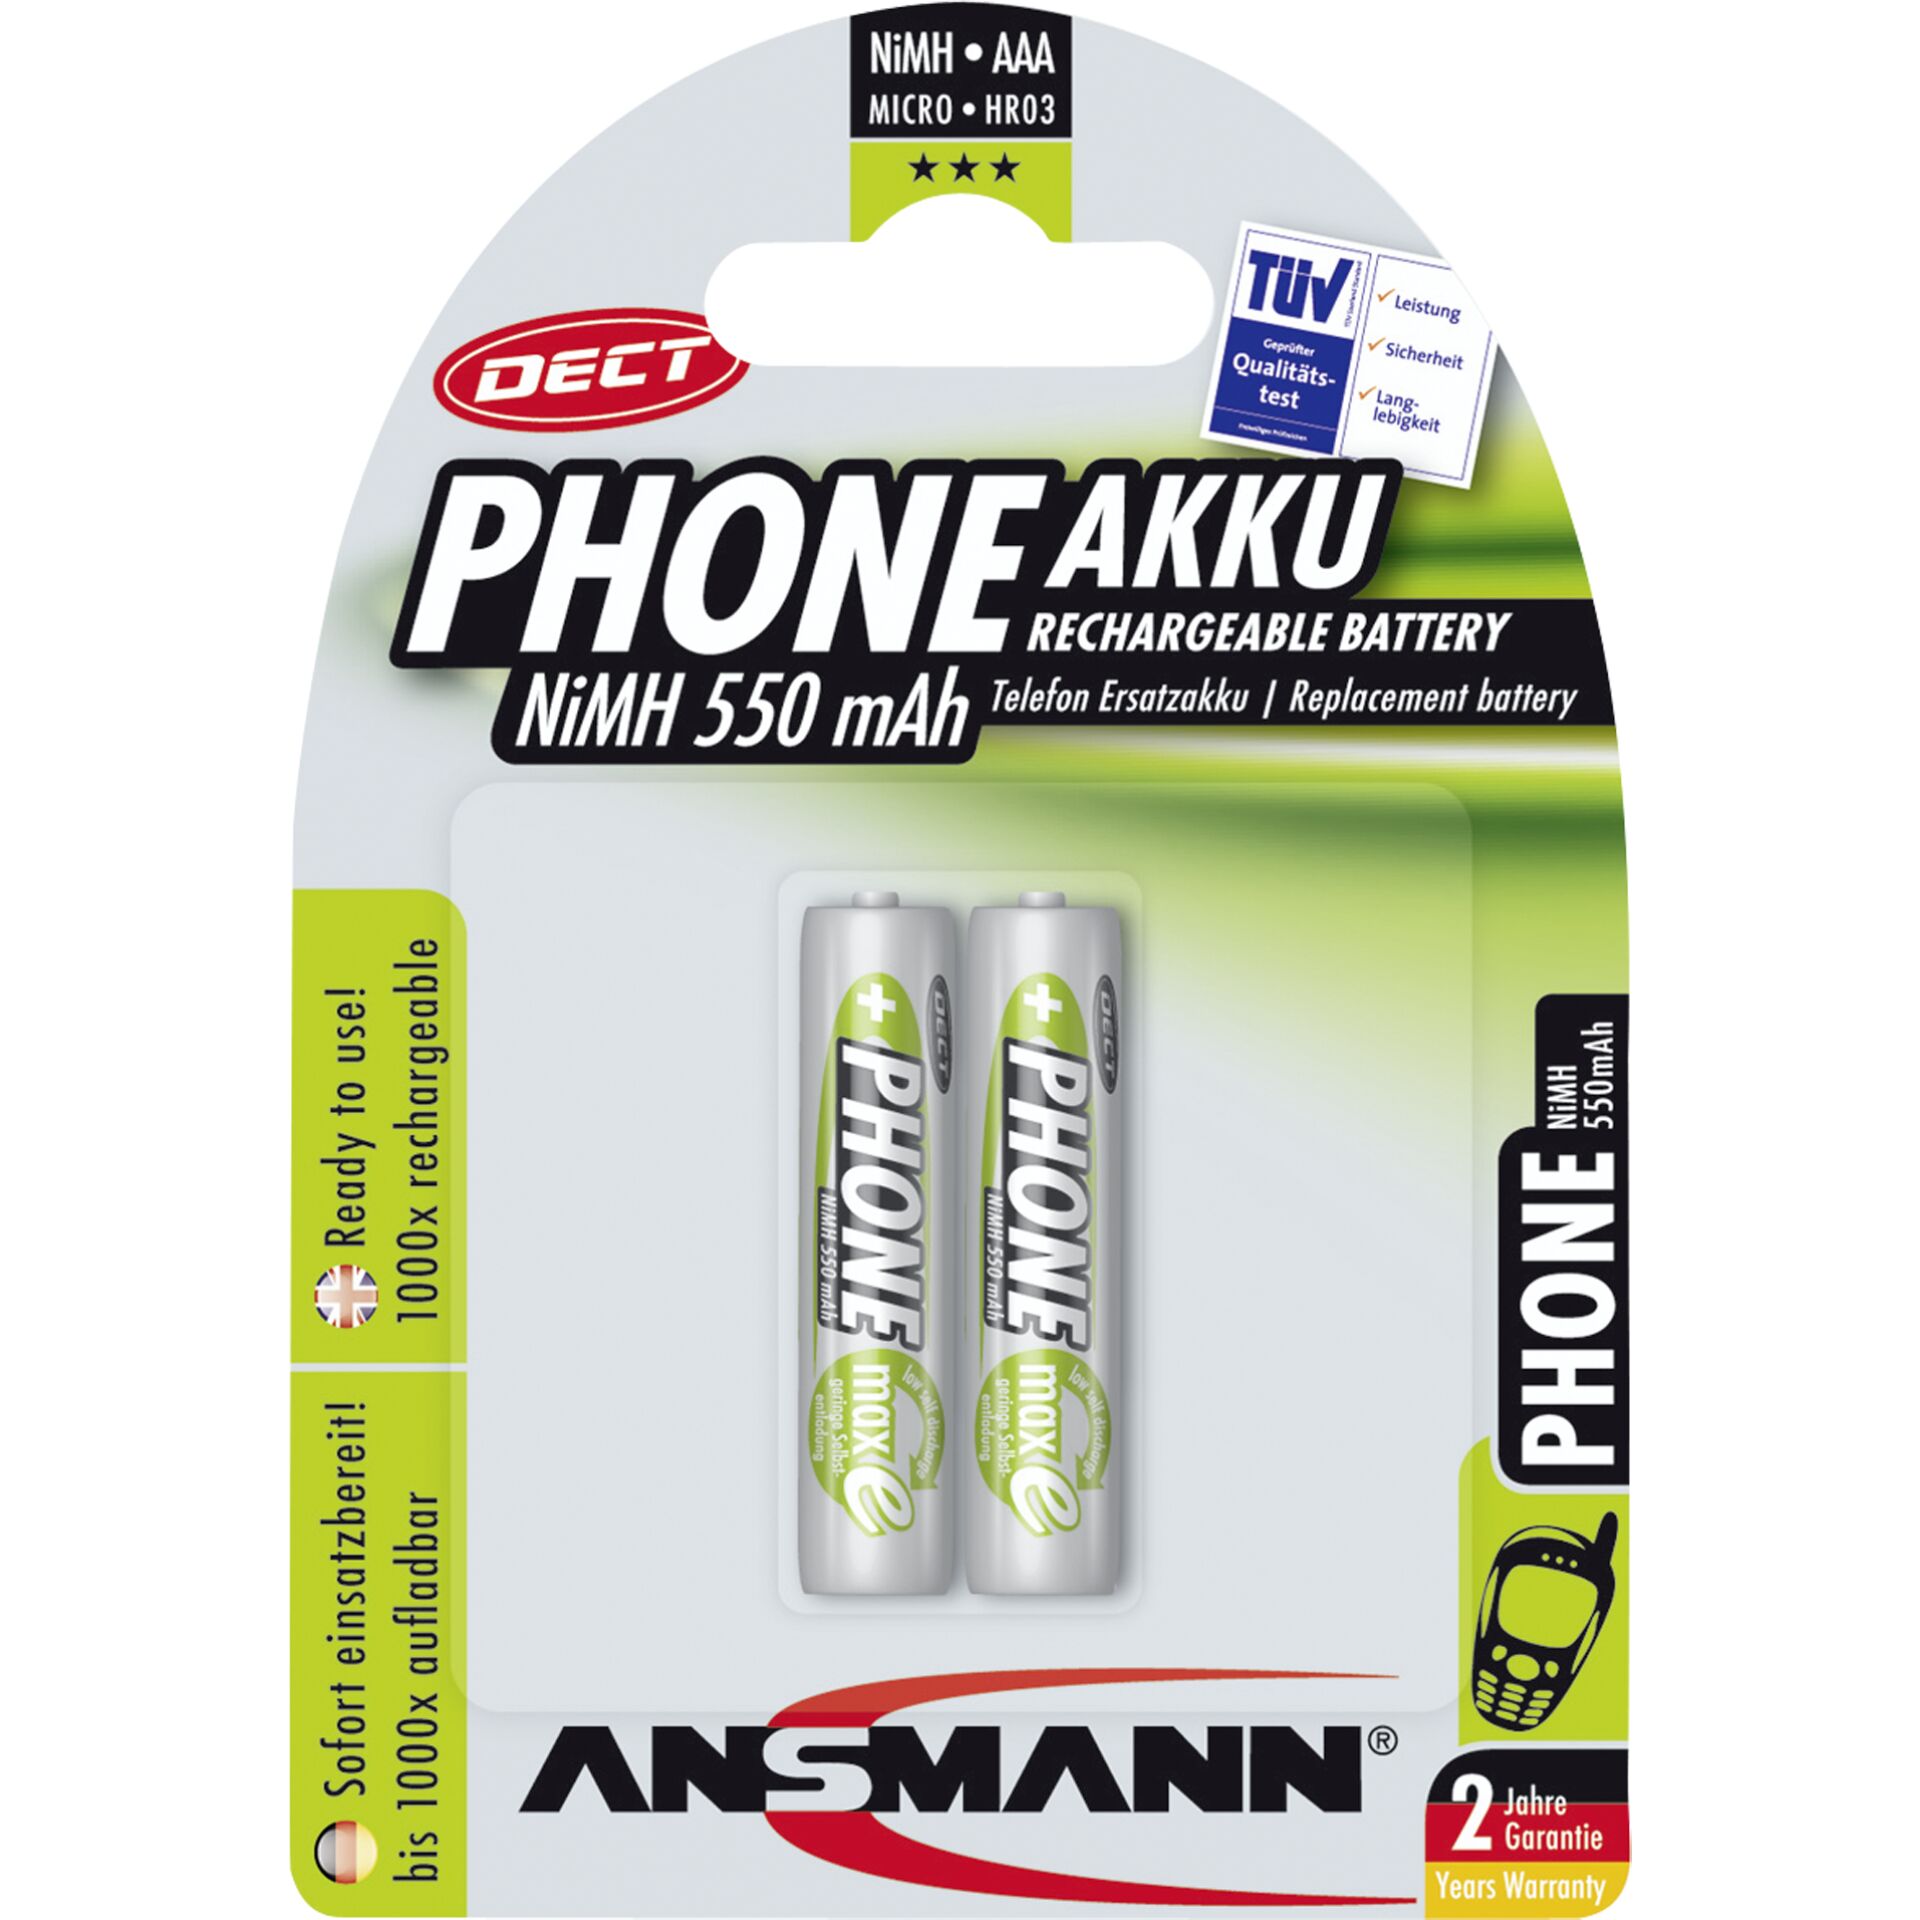 1x2 Ansmann maxE NiMH batteria Micro AAA 550 mAh DECT PHONE